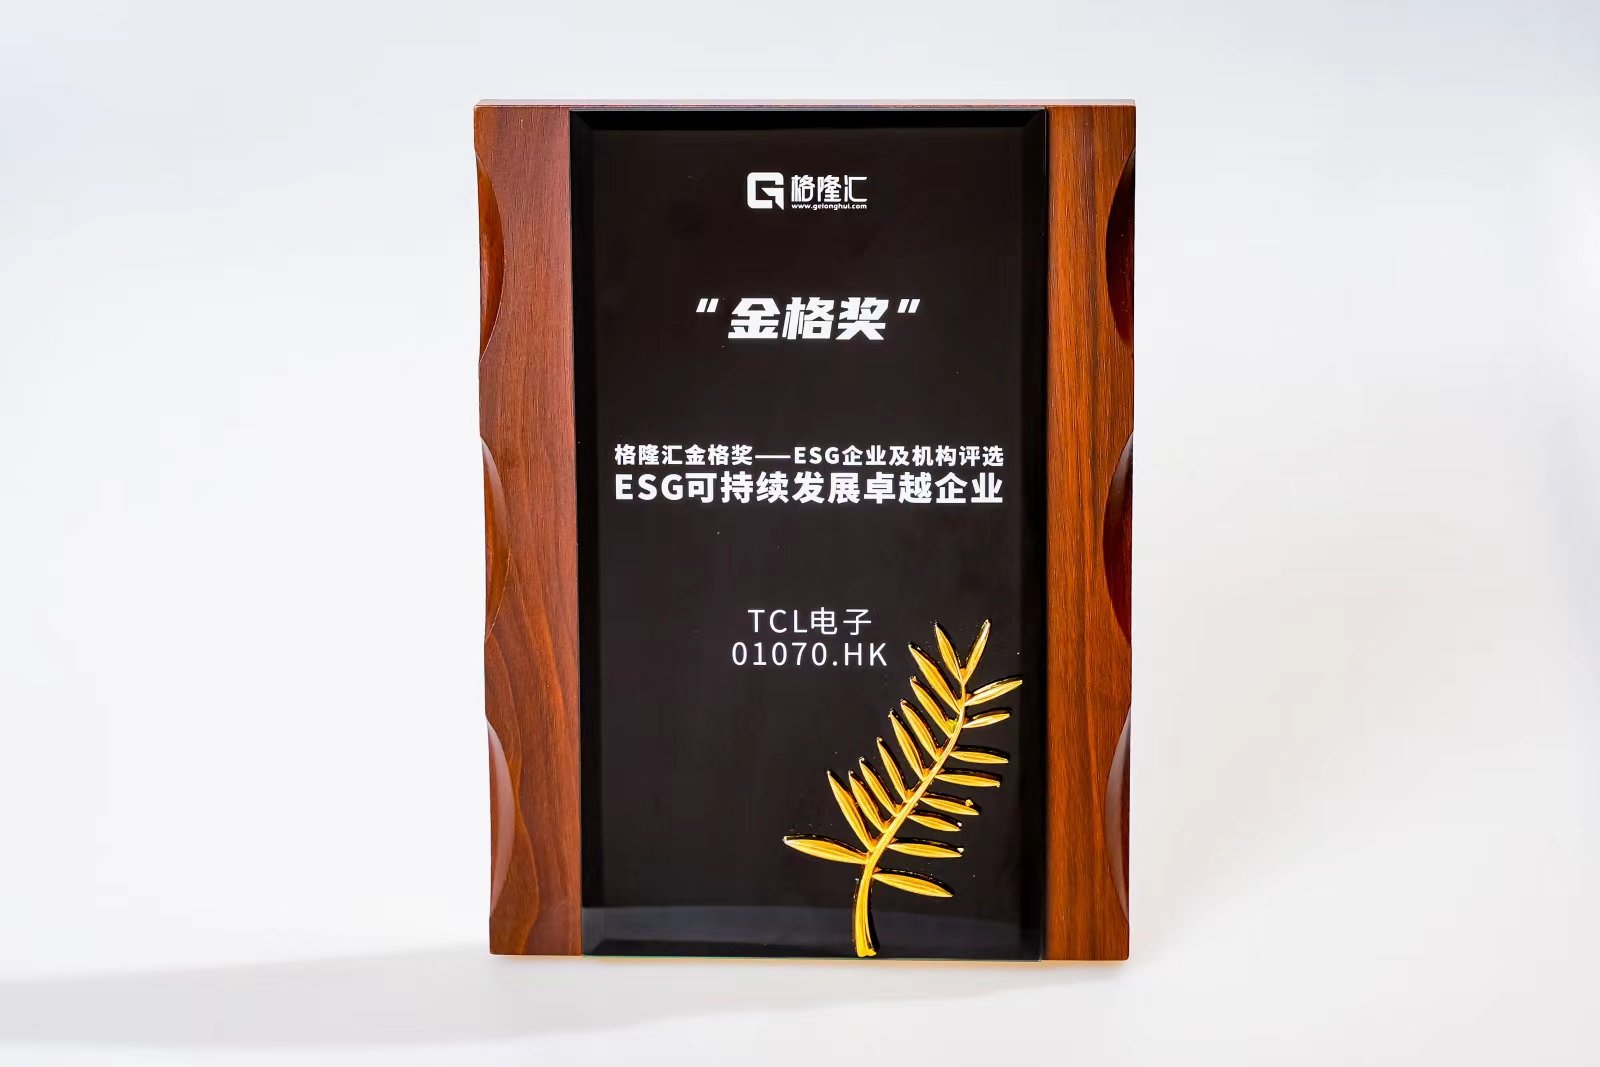 TCL电子(1070.HK)荣获格隆汇金格奖·ESG可持续发展卓越企业